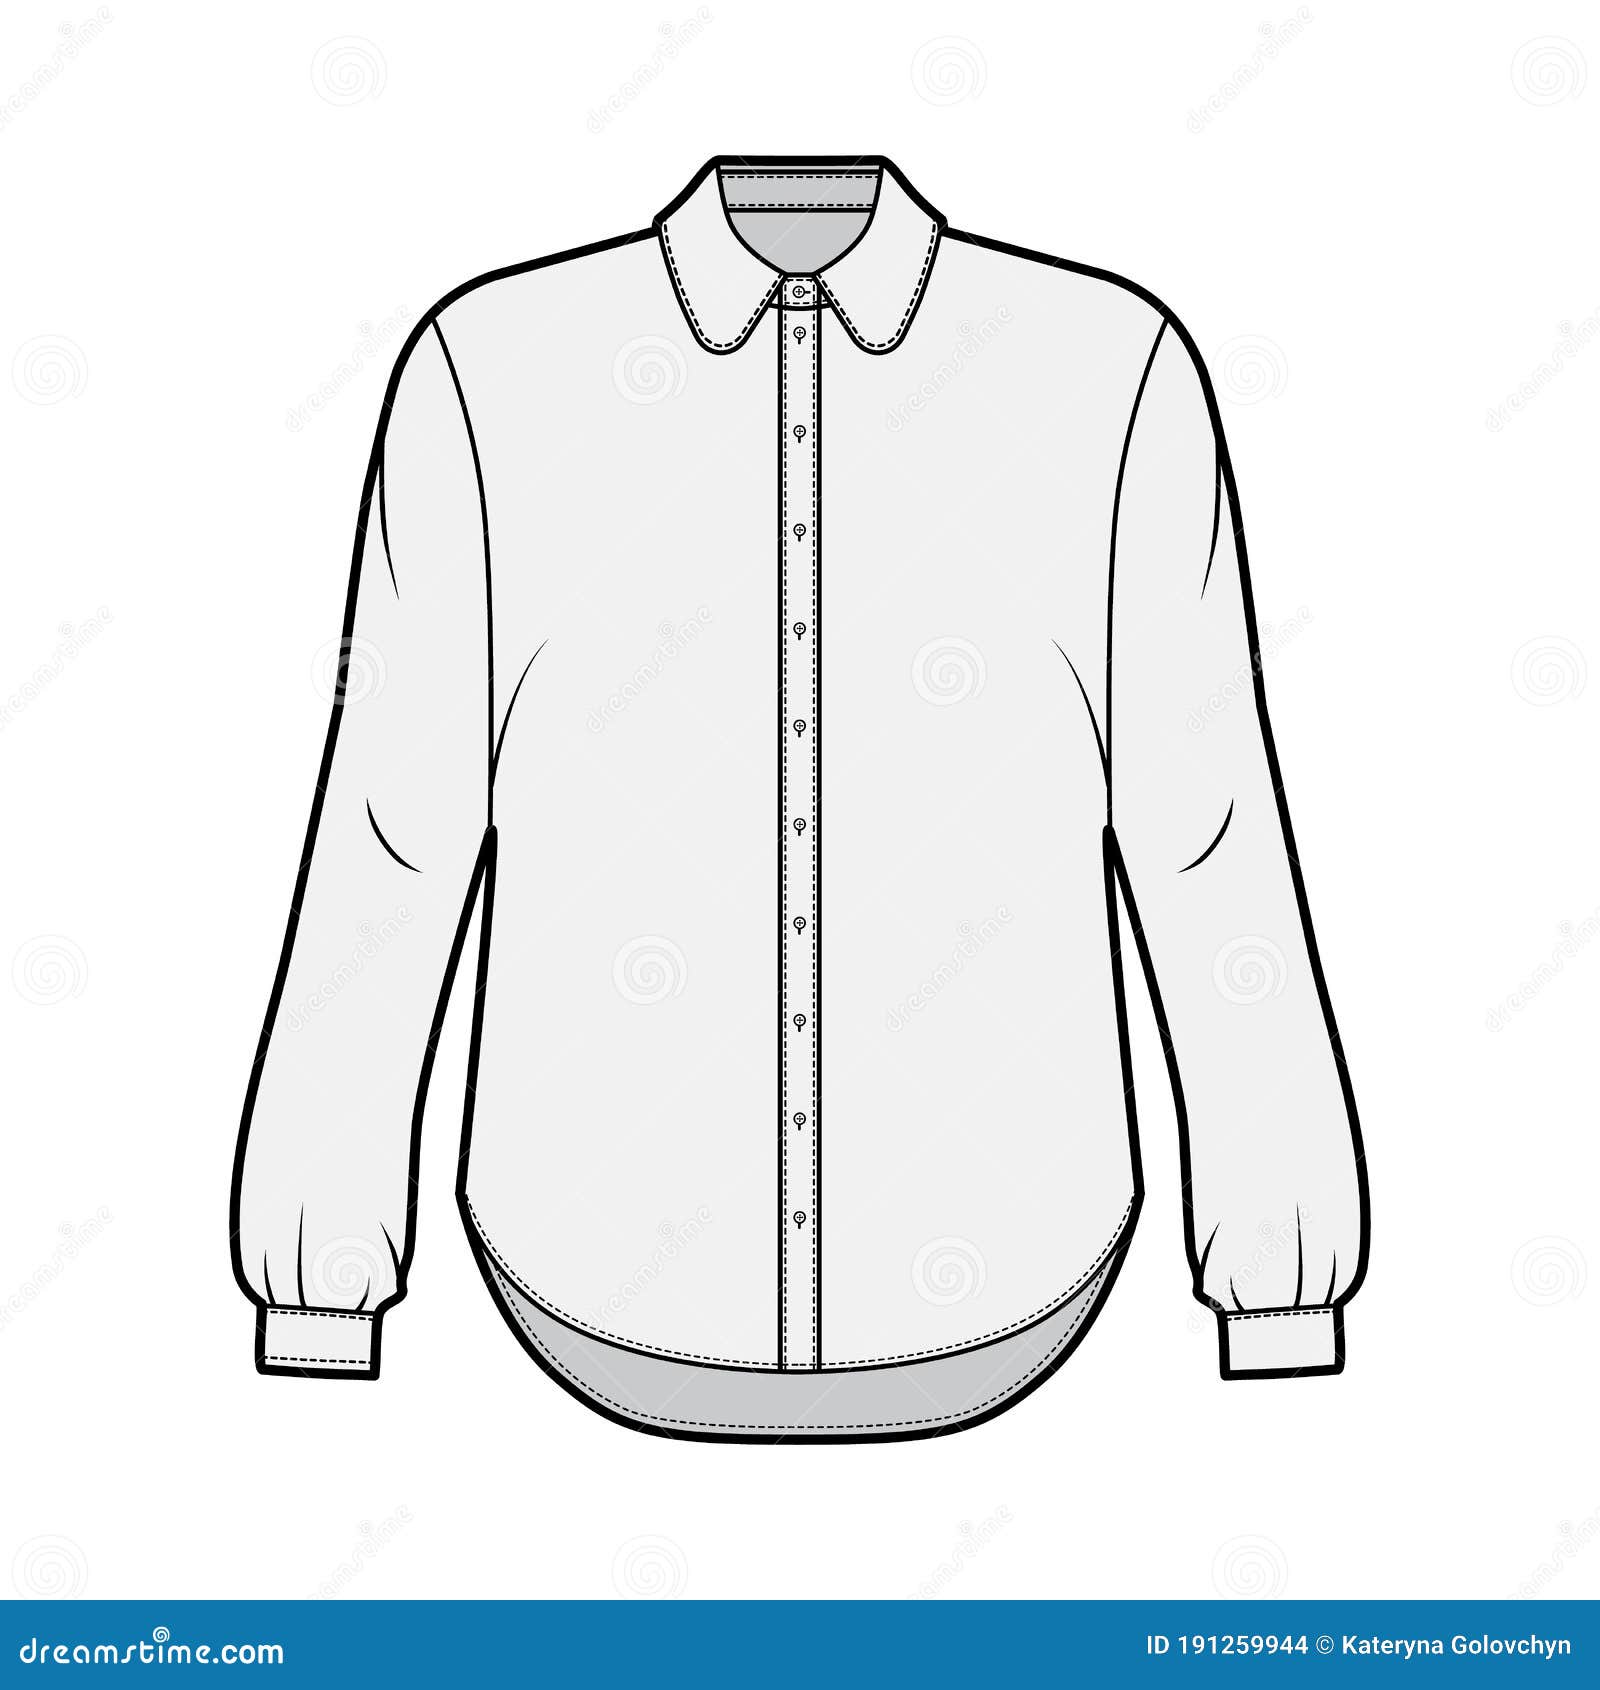 SportsX Men Long Sleeve Flat Collar Printing Buttoned Shirts 